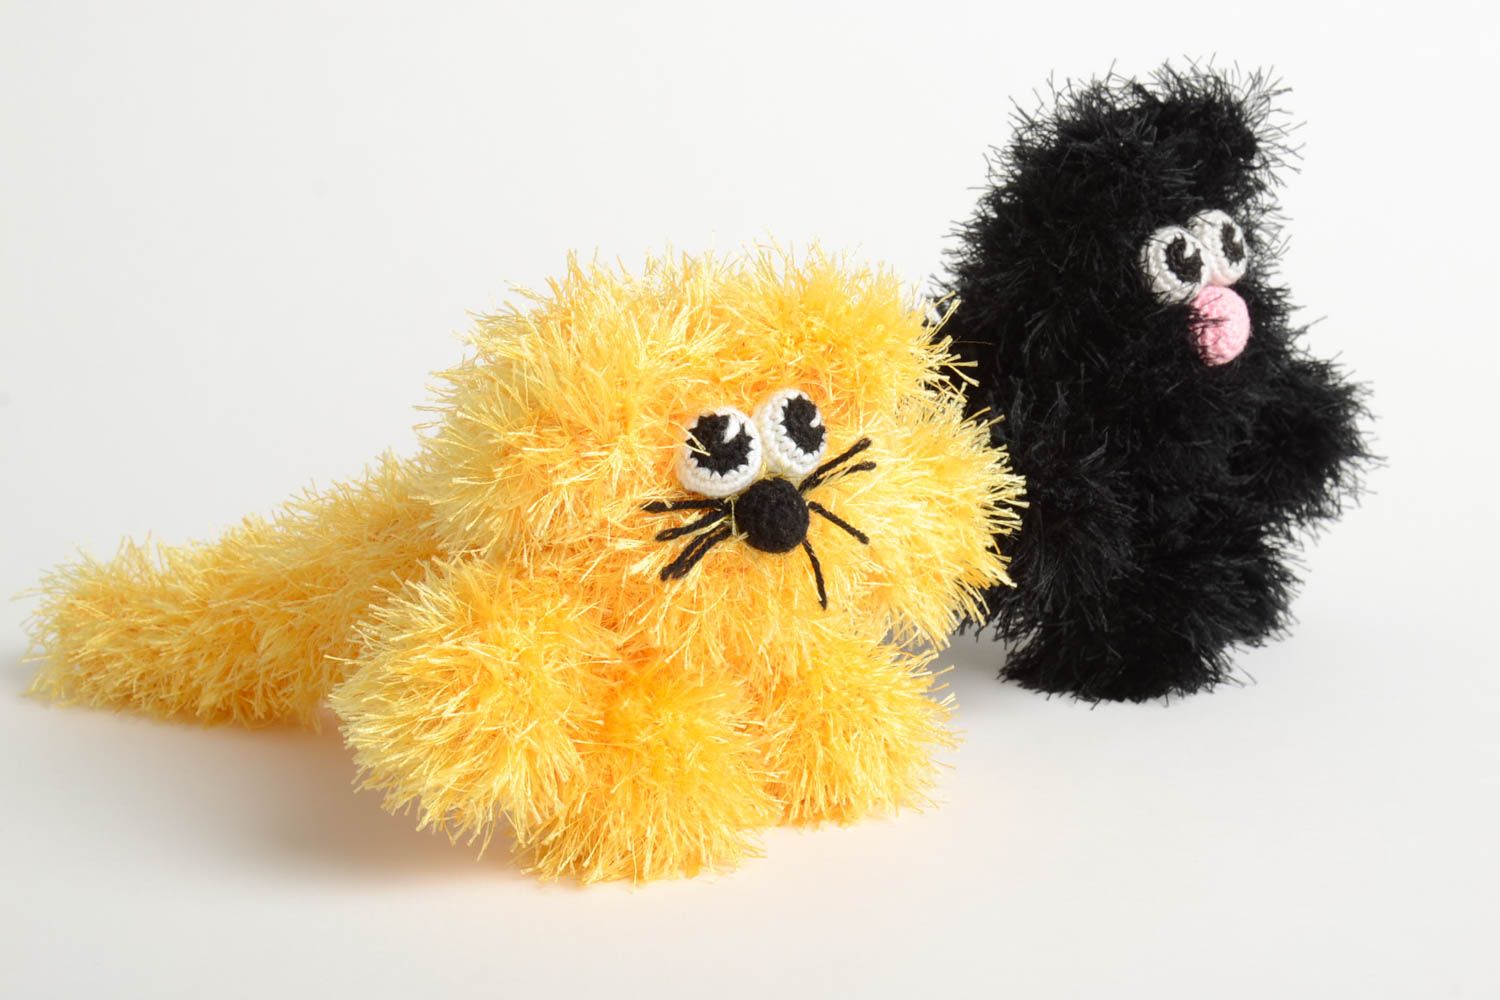 Handmade toy designer toy animal toy set of 2 items nursery decor gift ideas photo 5